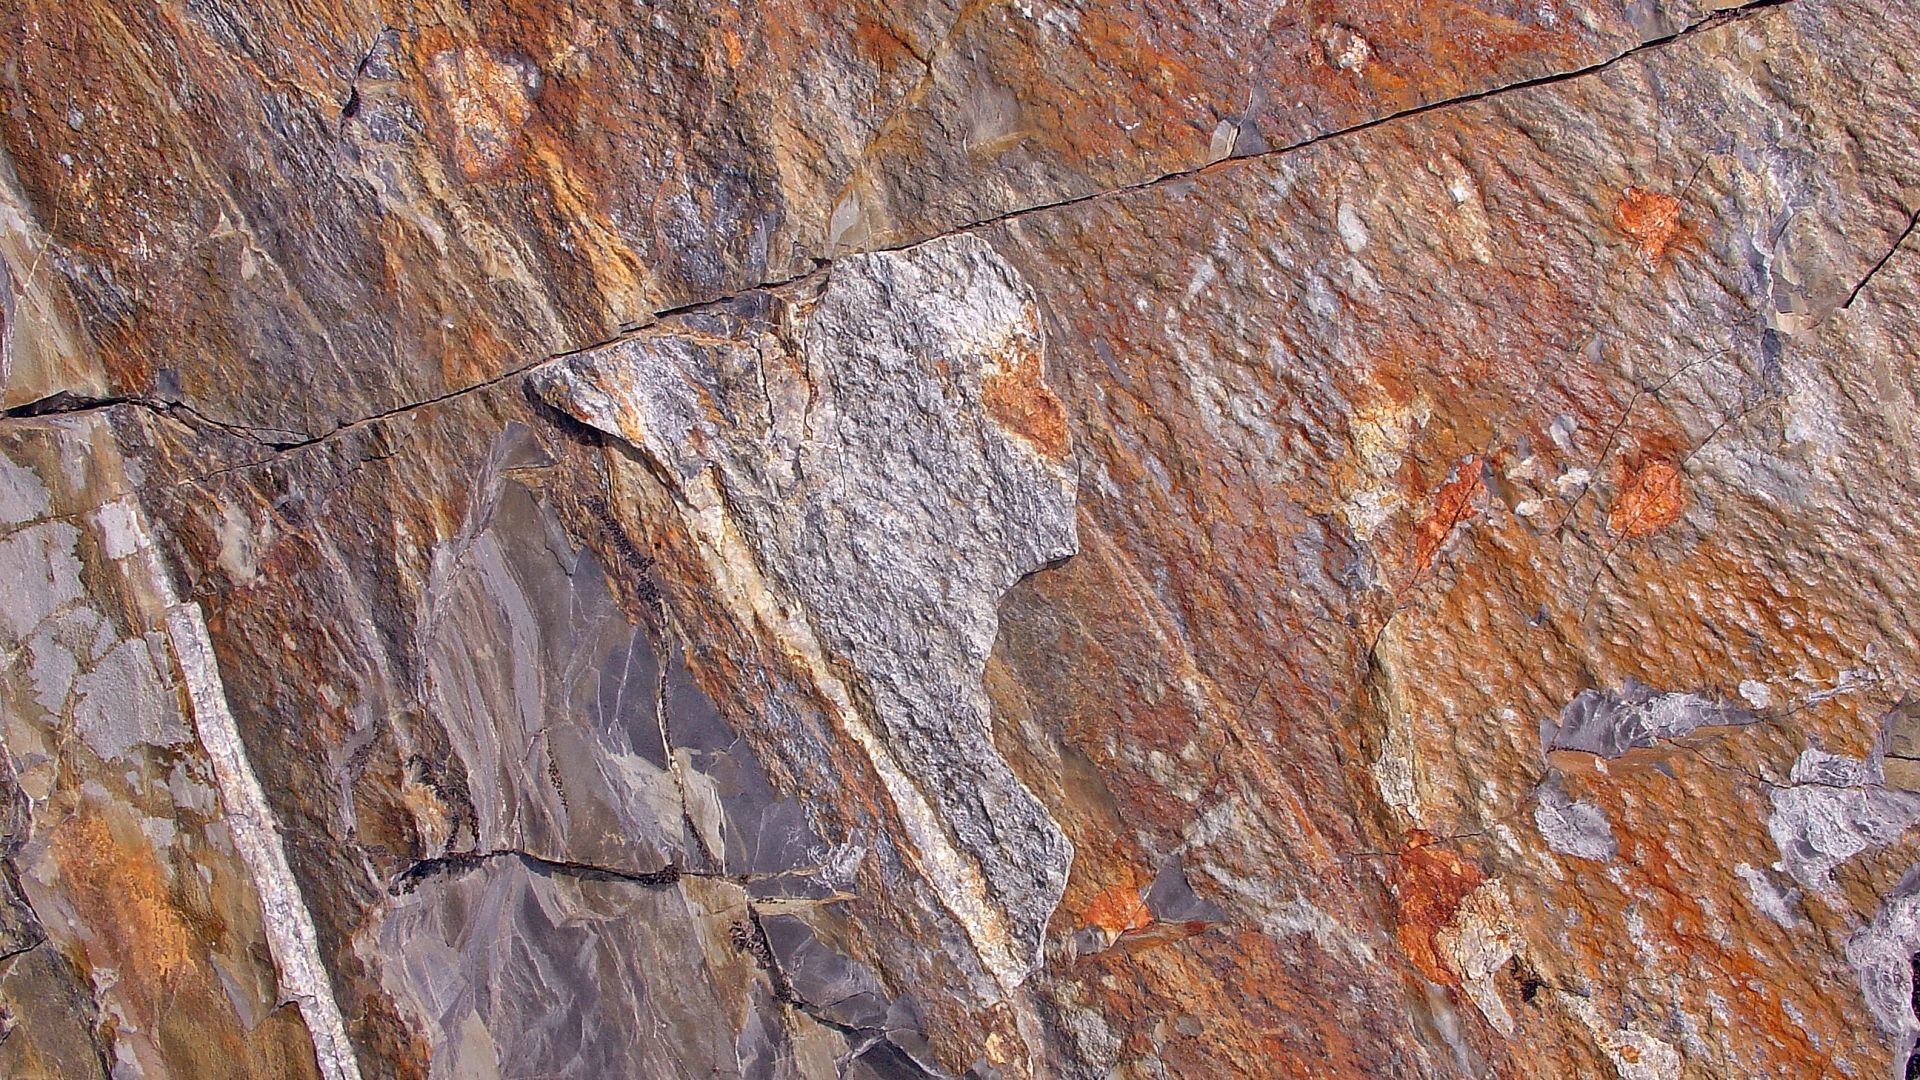 камень, 4k, 5k, коричневый, текстура, трещины, stone, 4k, 5k wallpaper, brown, pattern, cracks (horizontal)